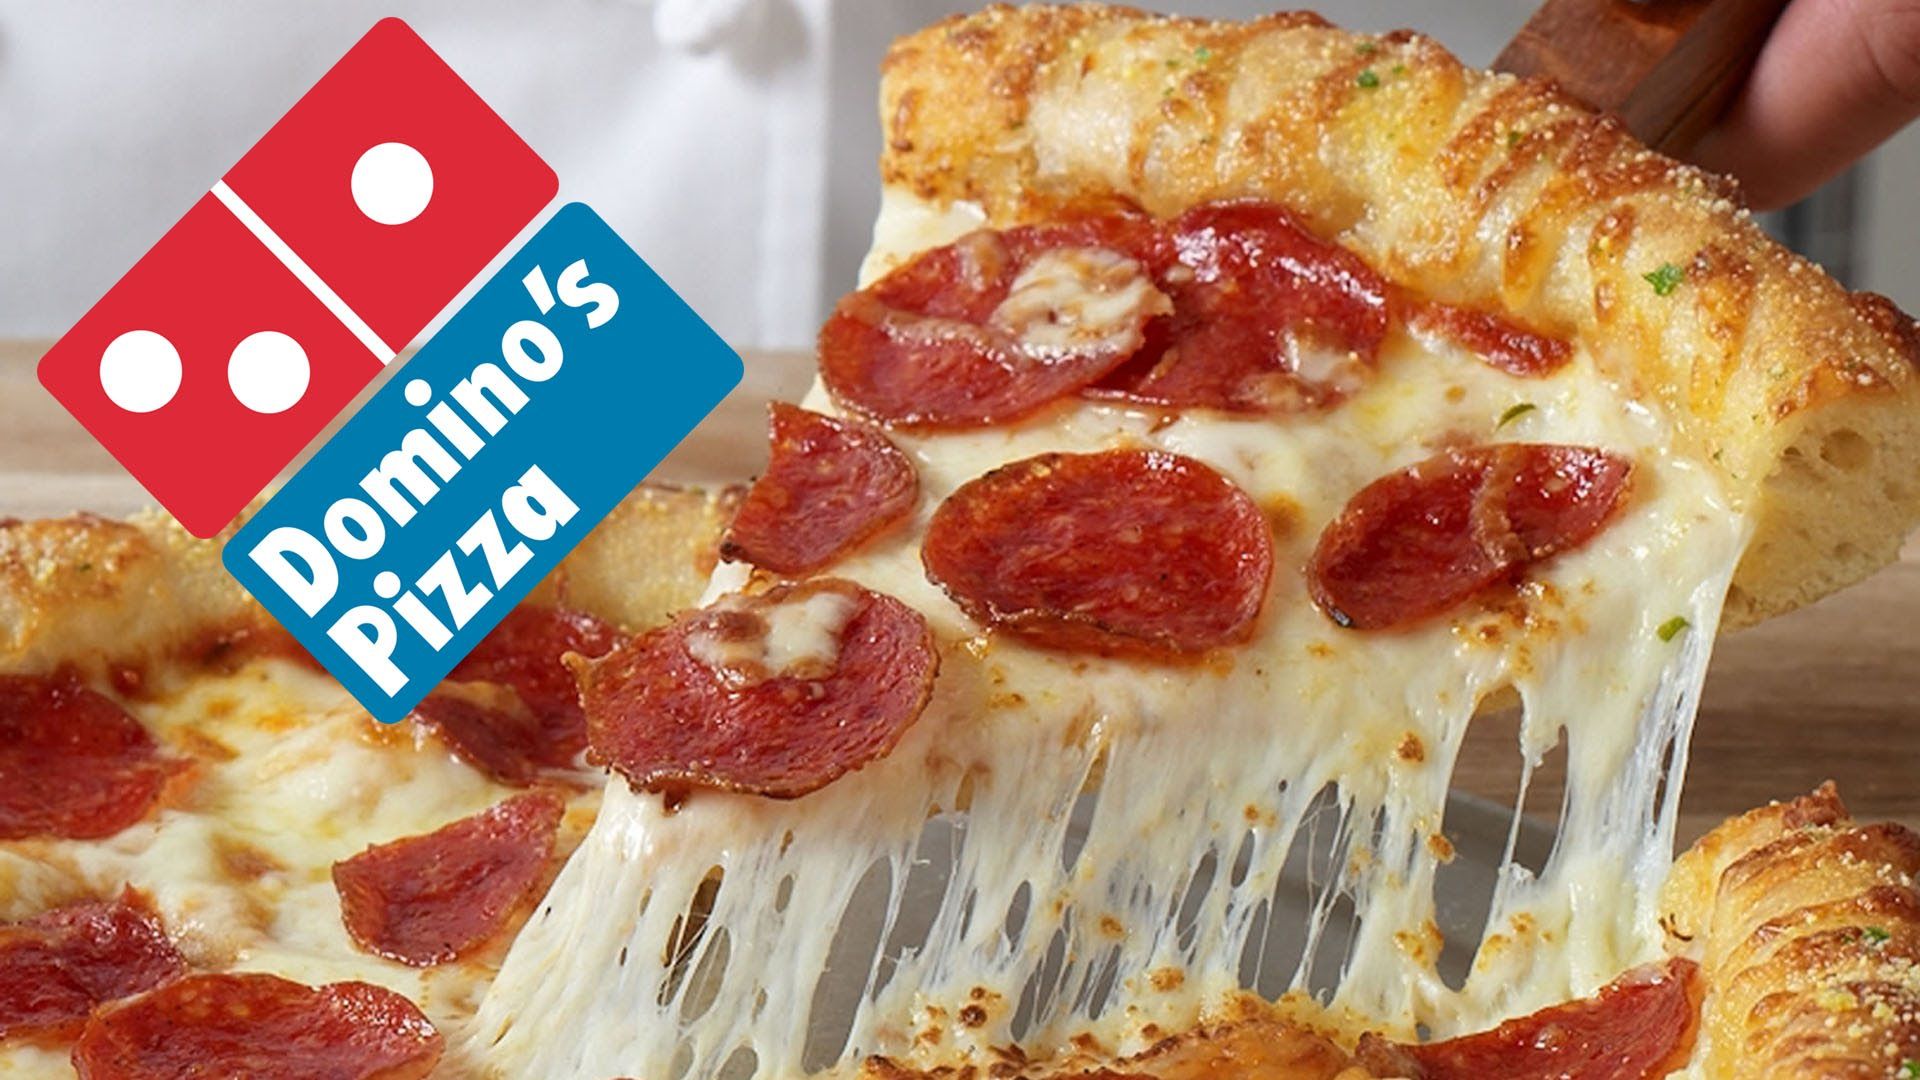 Domino's Pizza announces refinancing transaction